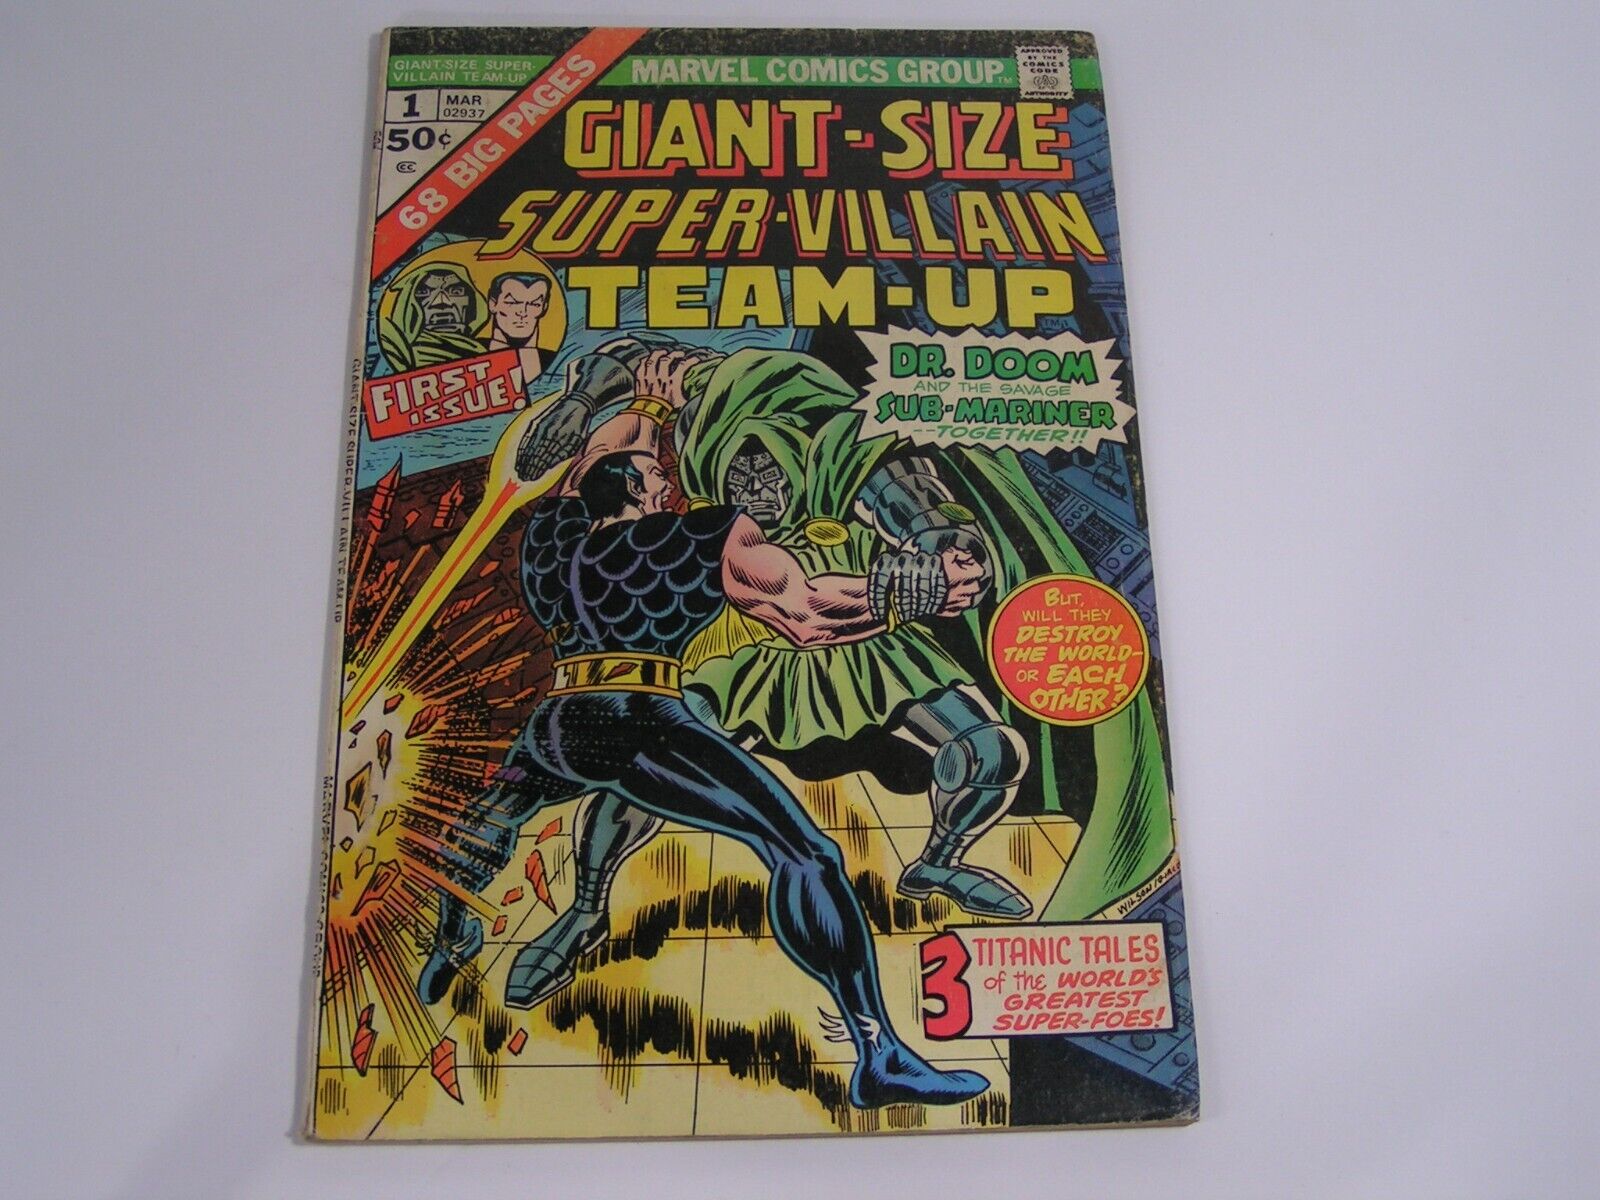 Giant-Size SUPER-VILLAIN TEAM-UP #1 Dr Doom Sub-Mariner 1975